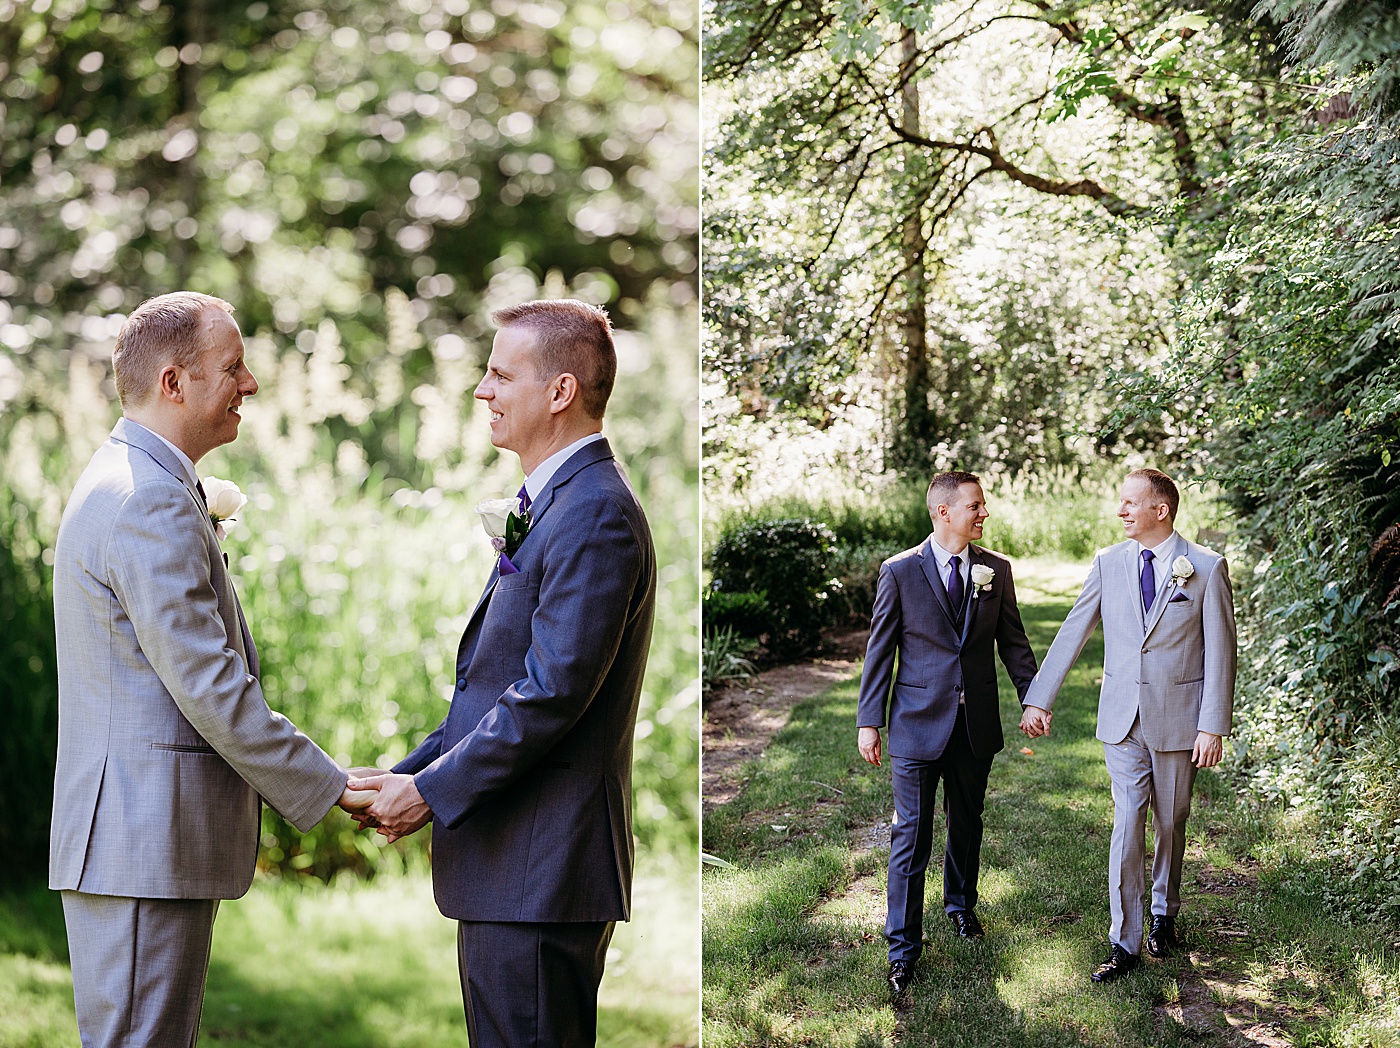 First look portraits for same-sex wedding at Sanders Estate | Megan Montalvo Photography